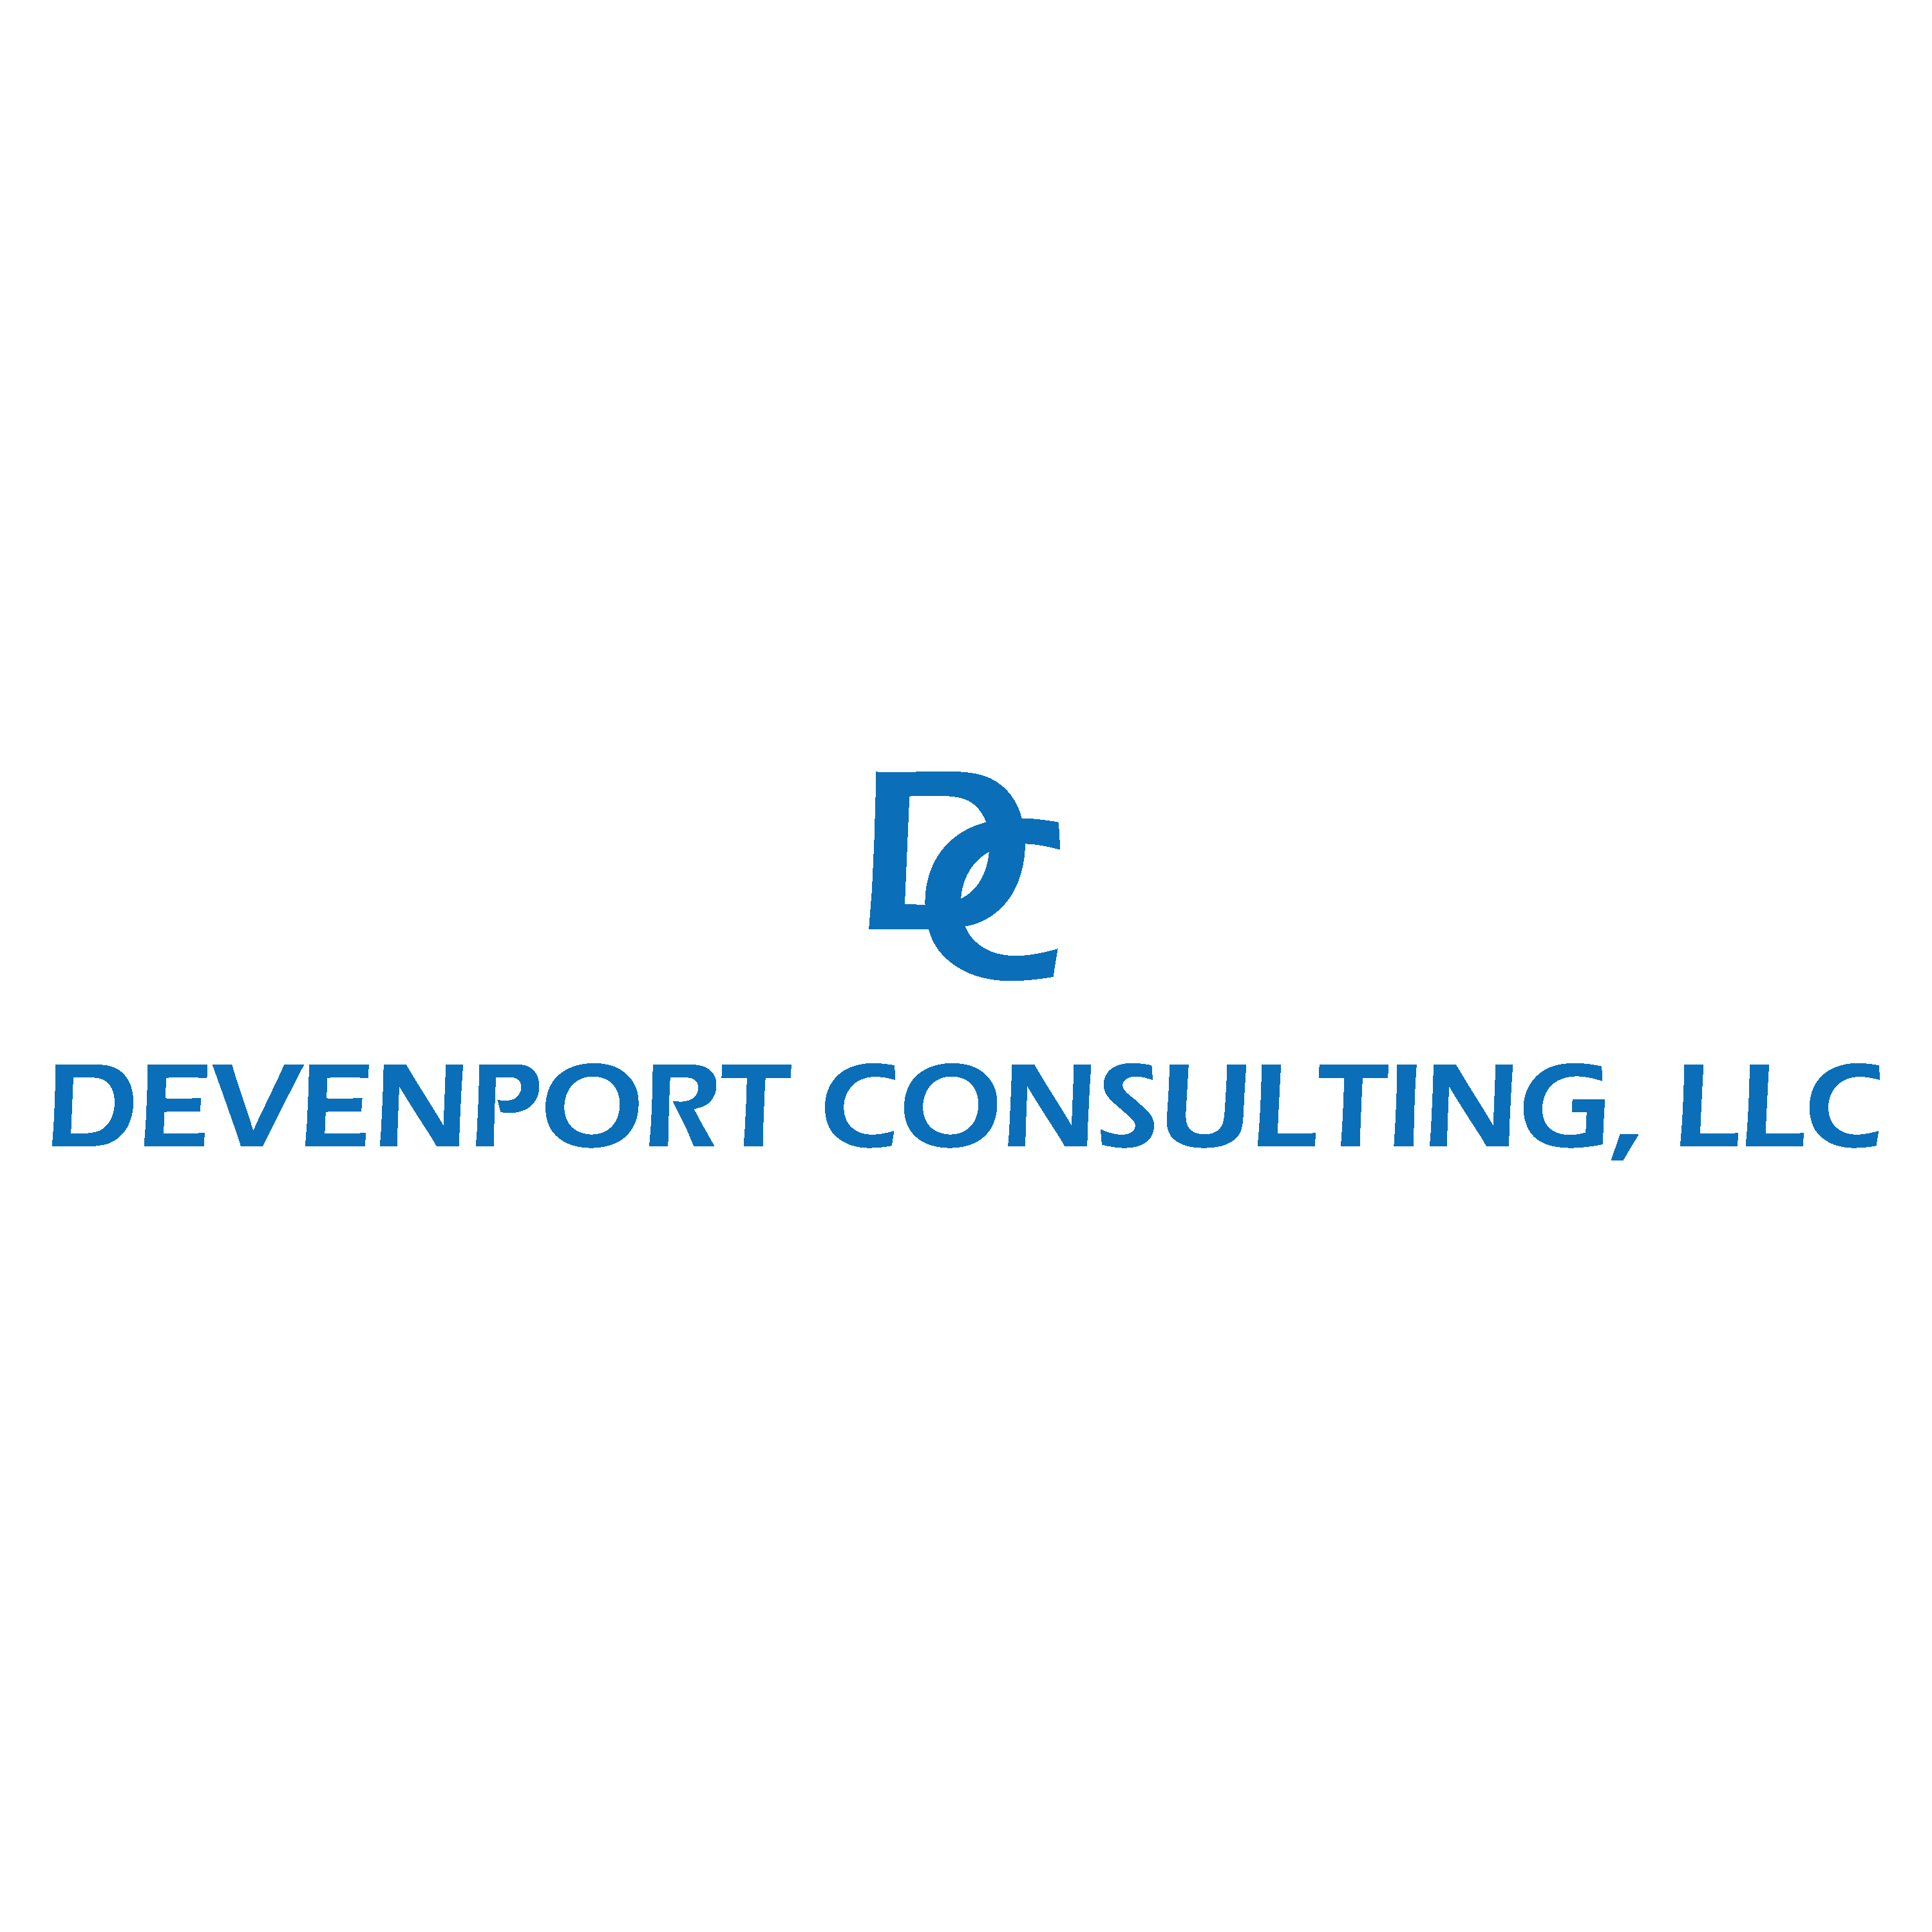 Devenport Consulting, LLC